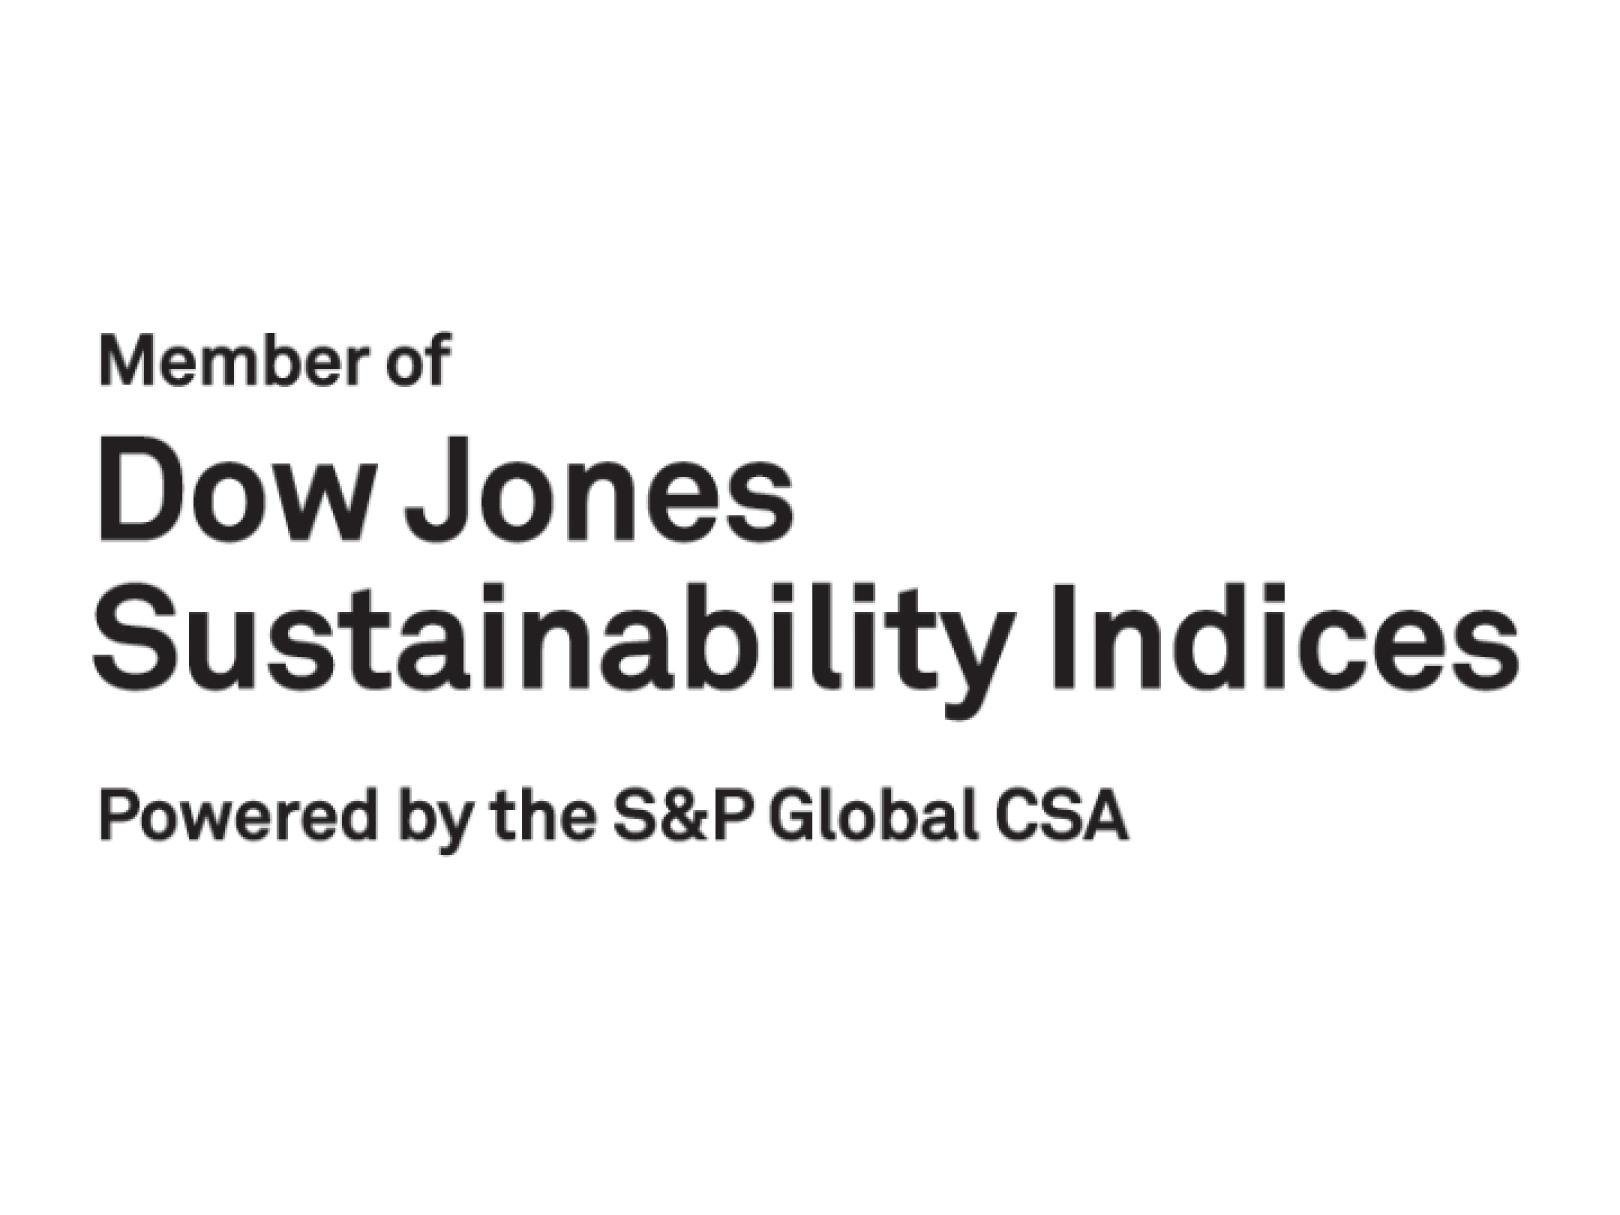 Dow Jones Sustainability North America Index